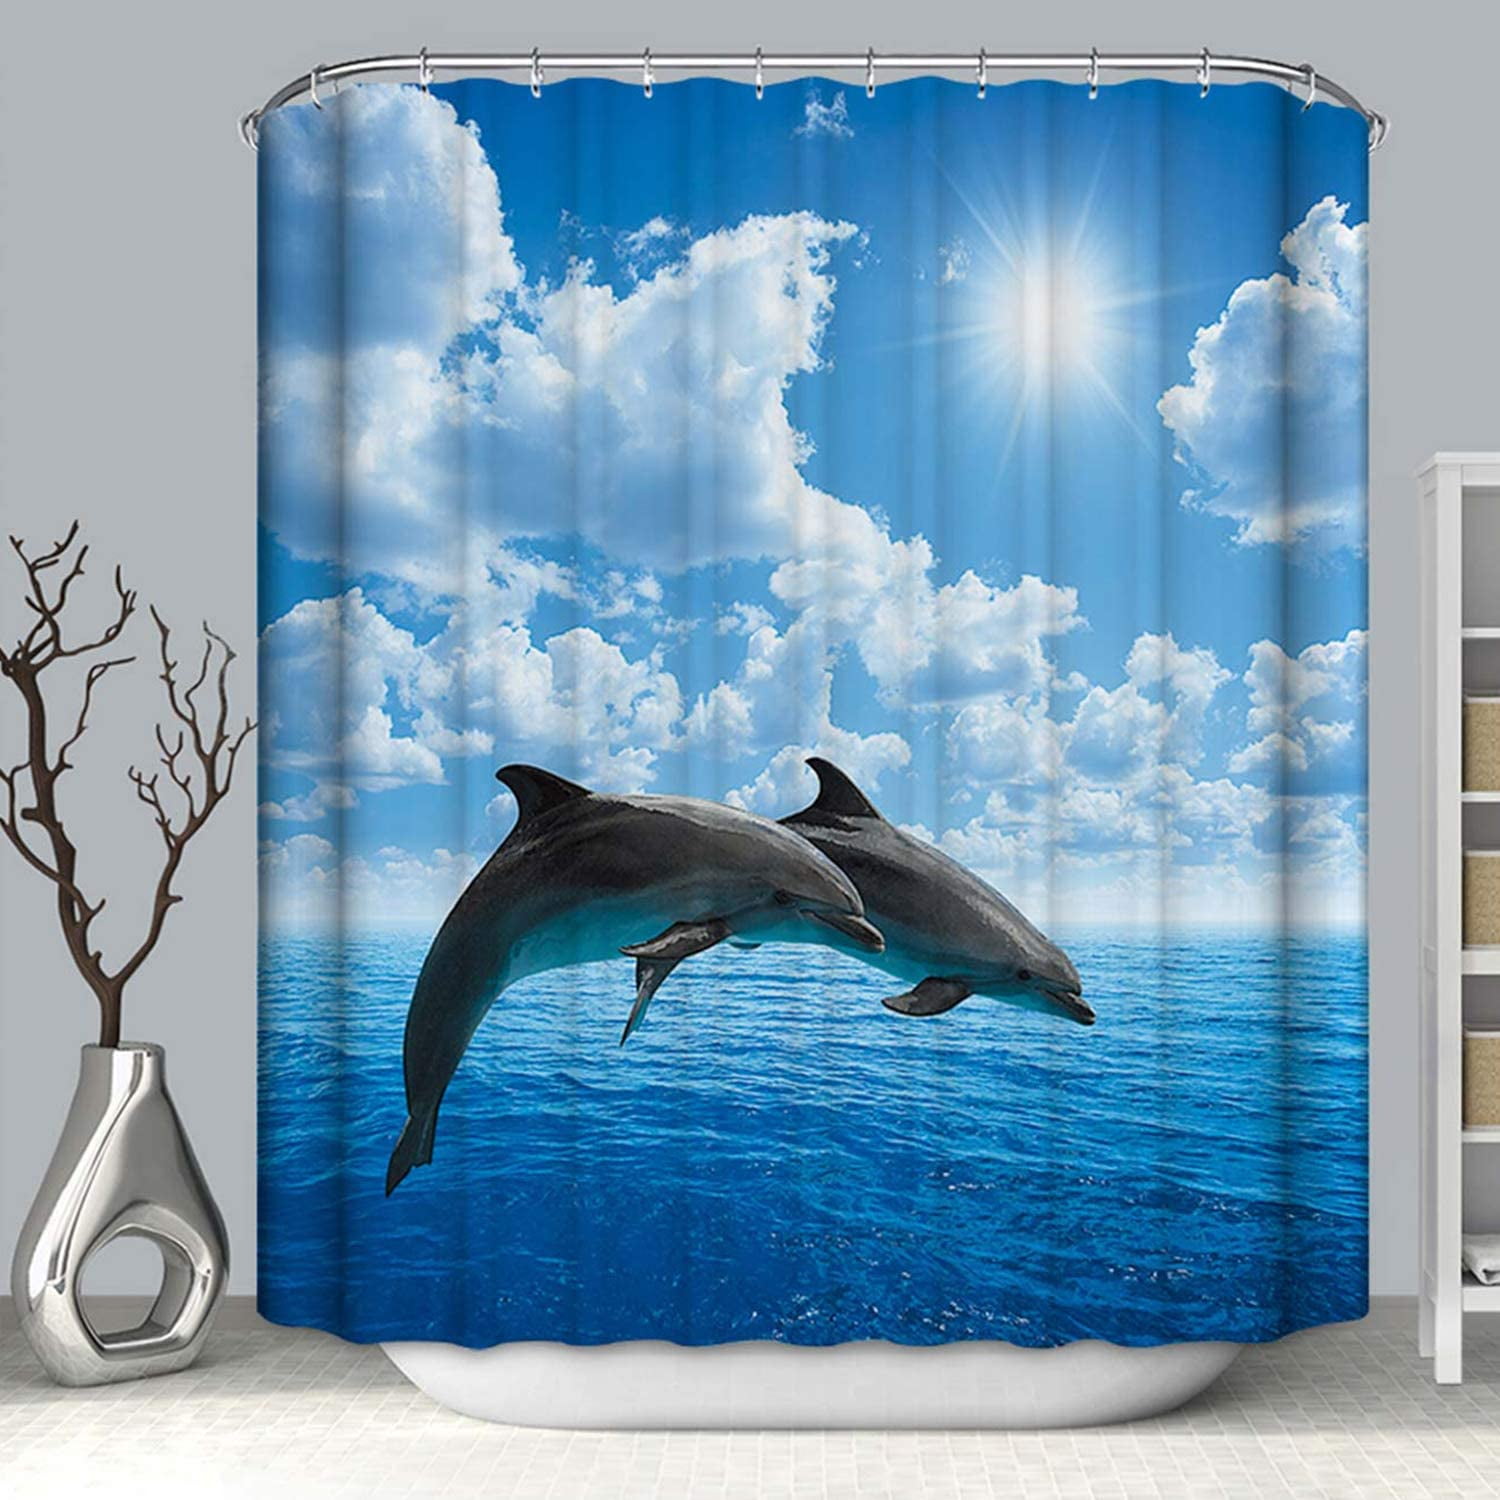 Sea Dolphins Waterproof Bathroom Polyester Shower Curtain Liner Water Resistant 